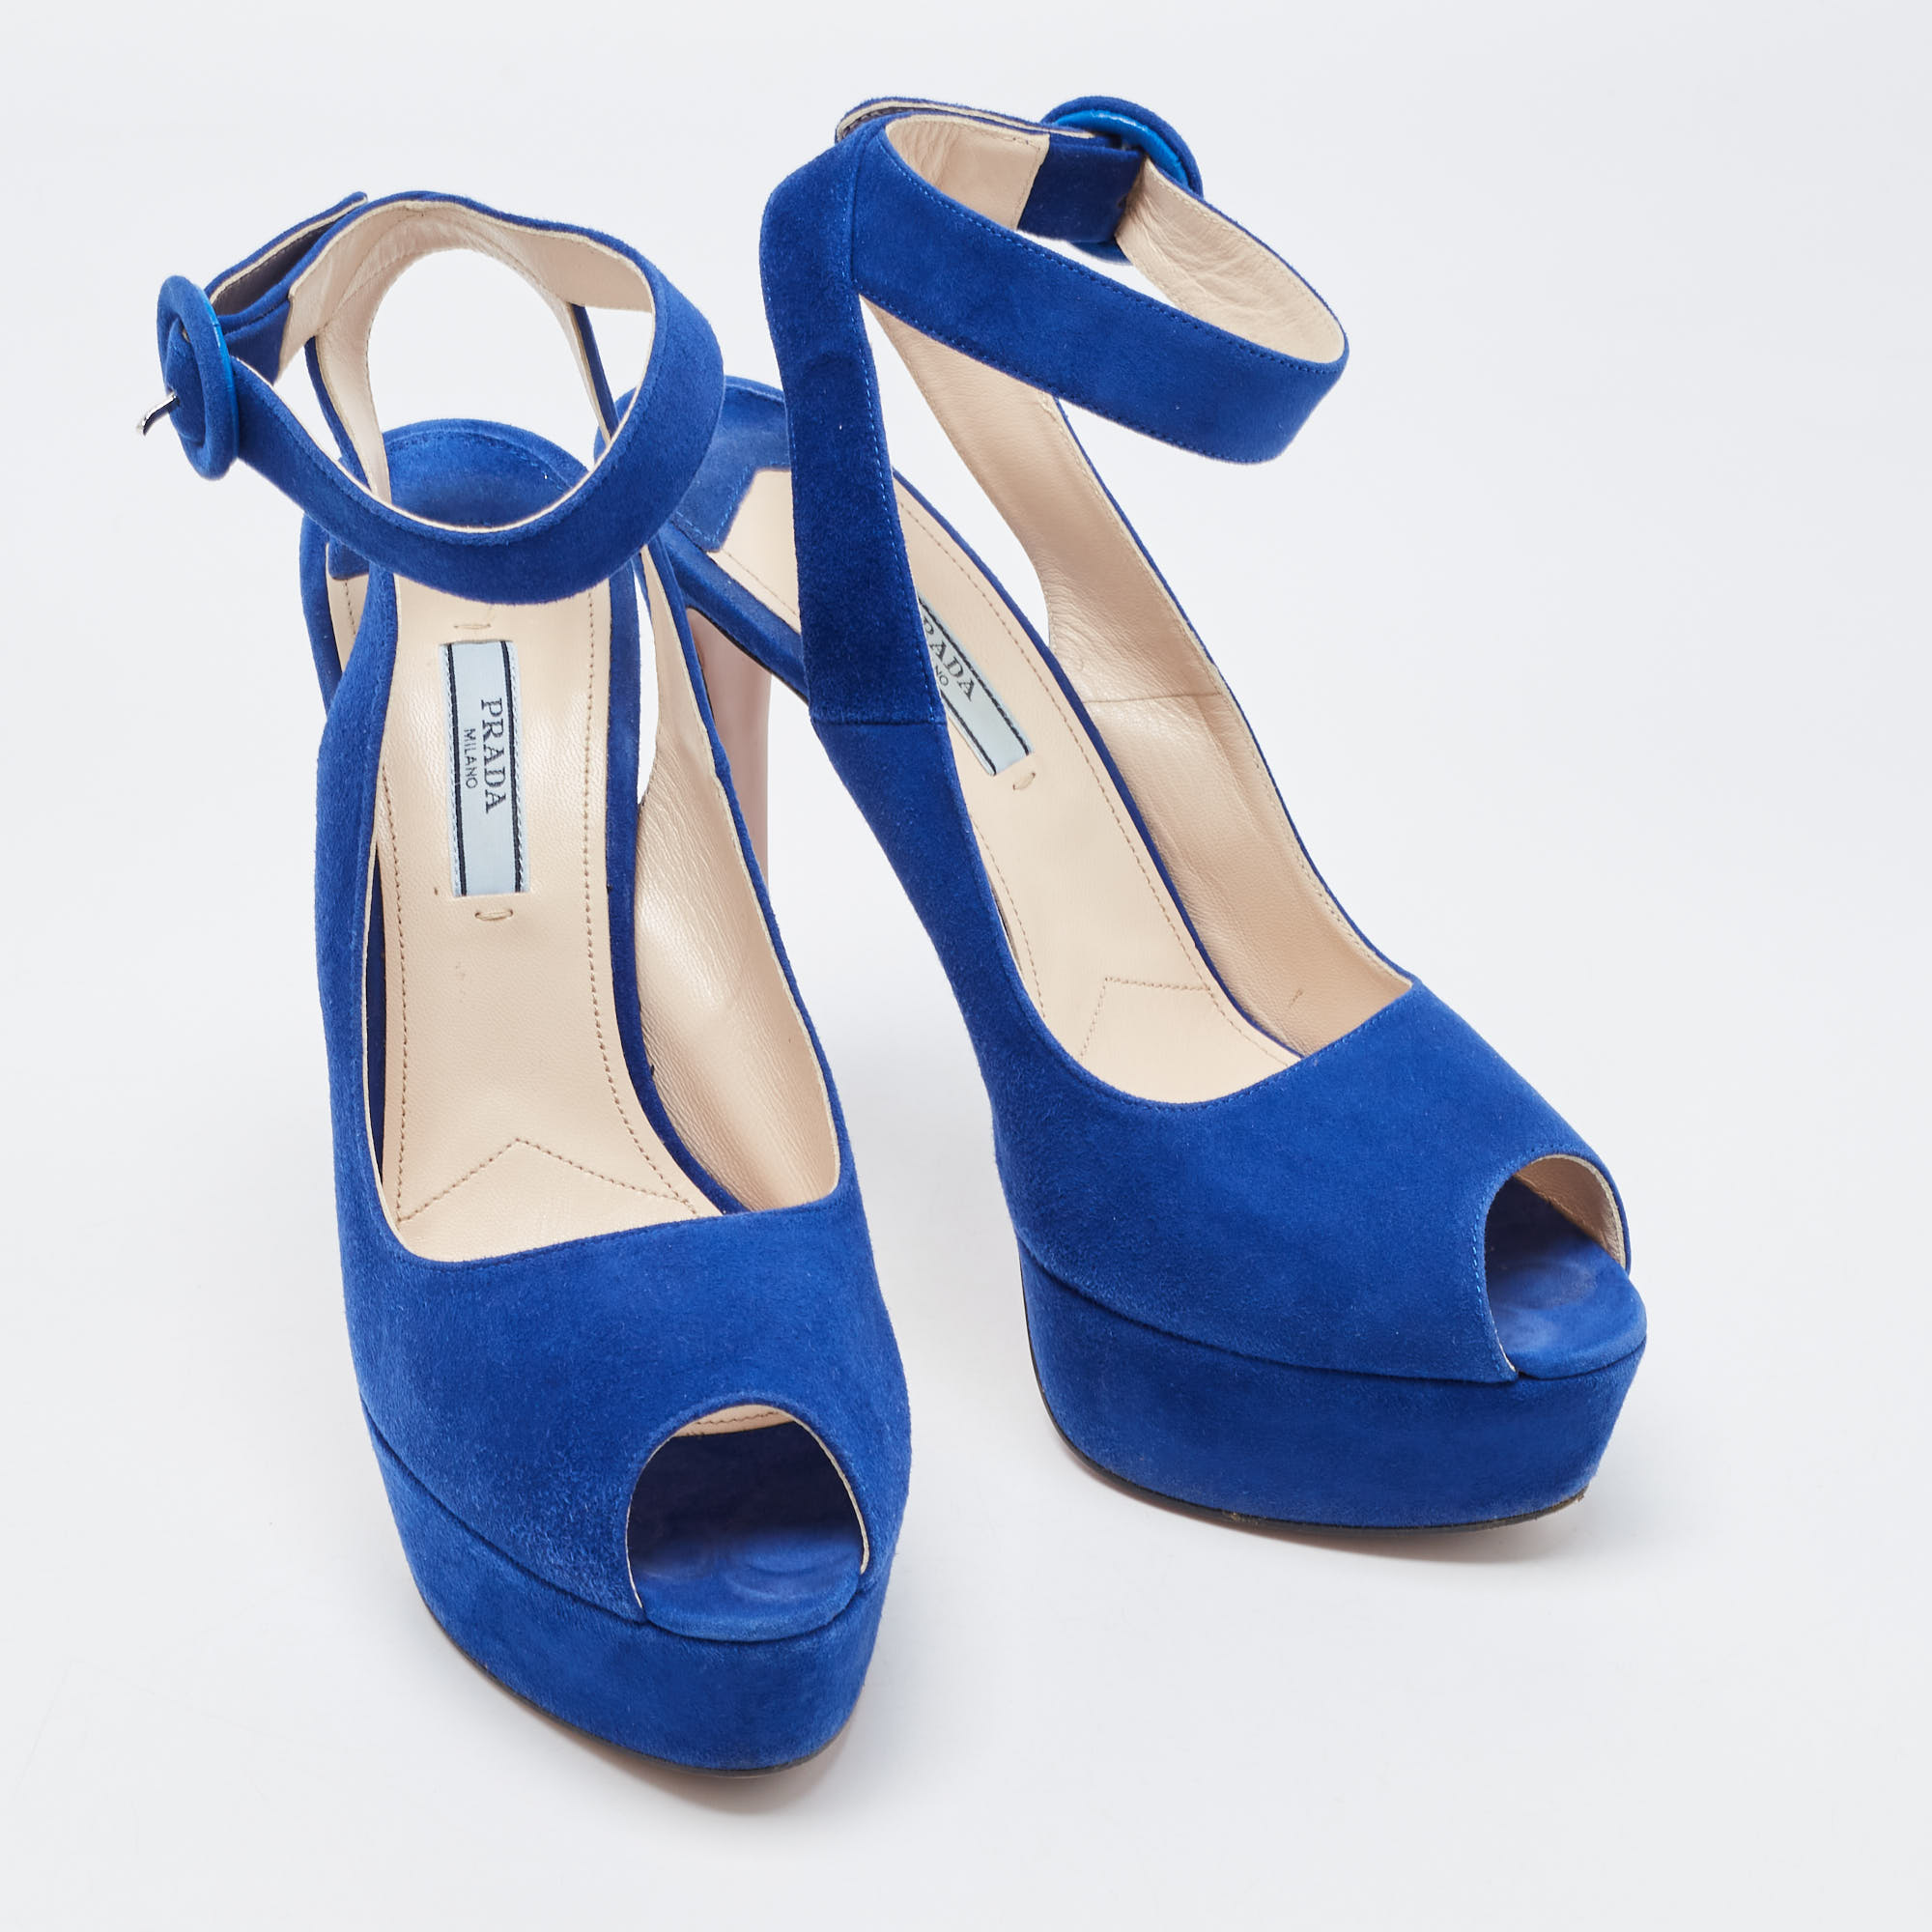 Prada Blue Suede Peep Toe Platform Ankle Strap Sandals Size 39